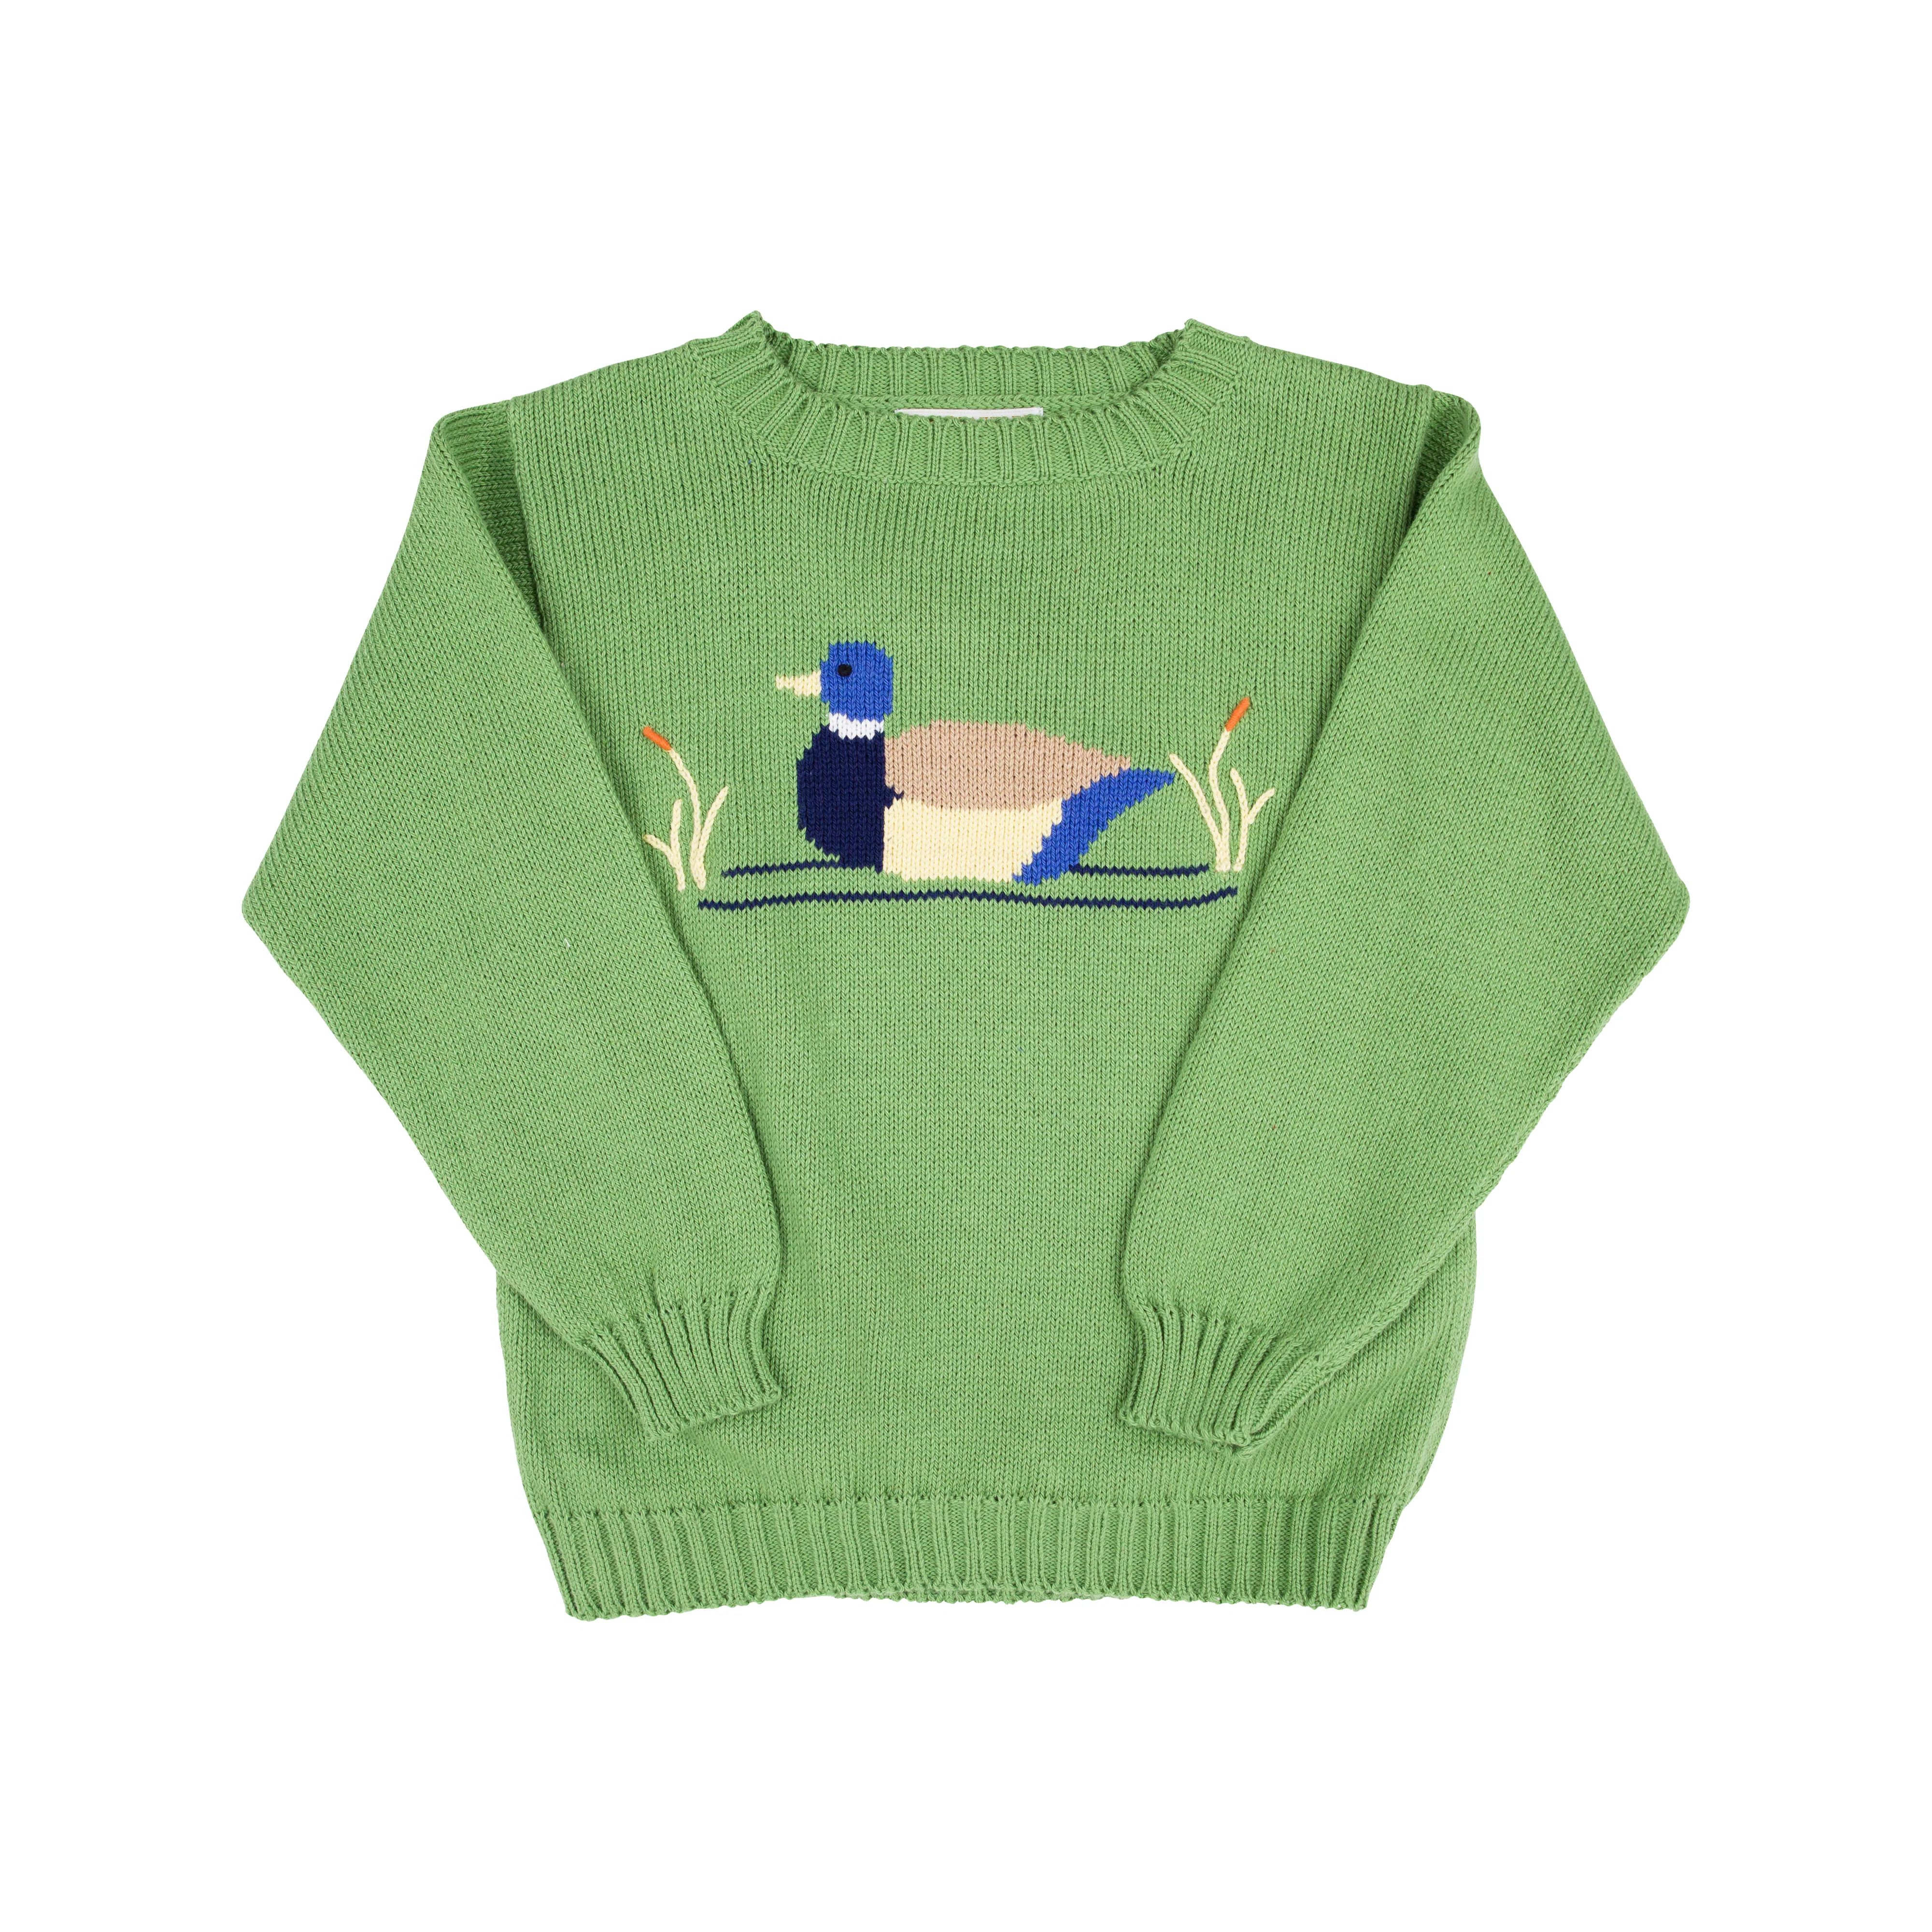 Isaac's Intarsia Sweater (Unisex) - Grenada Green with Mallard Intarsia | The Beaufort Bonnet Company